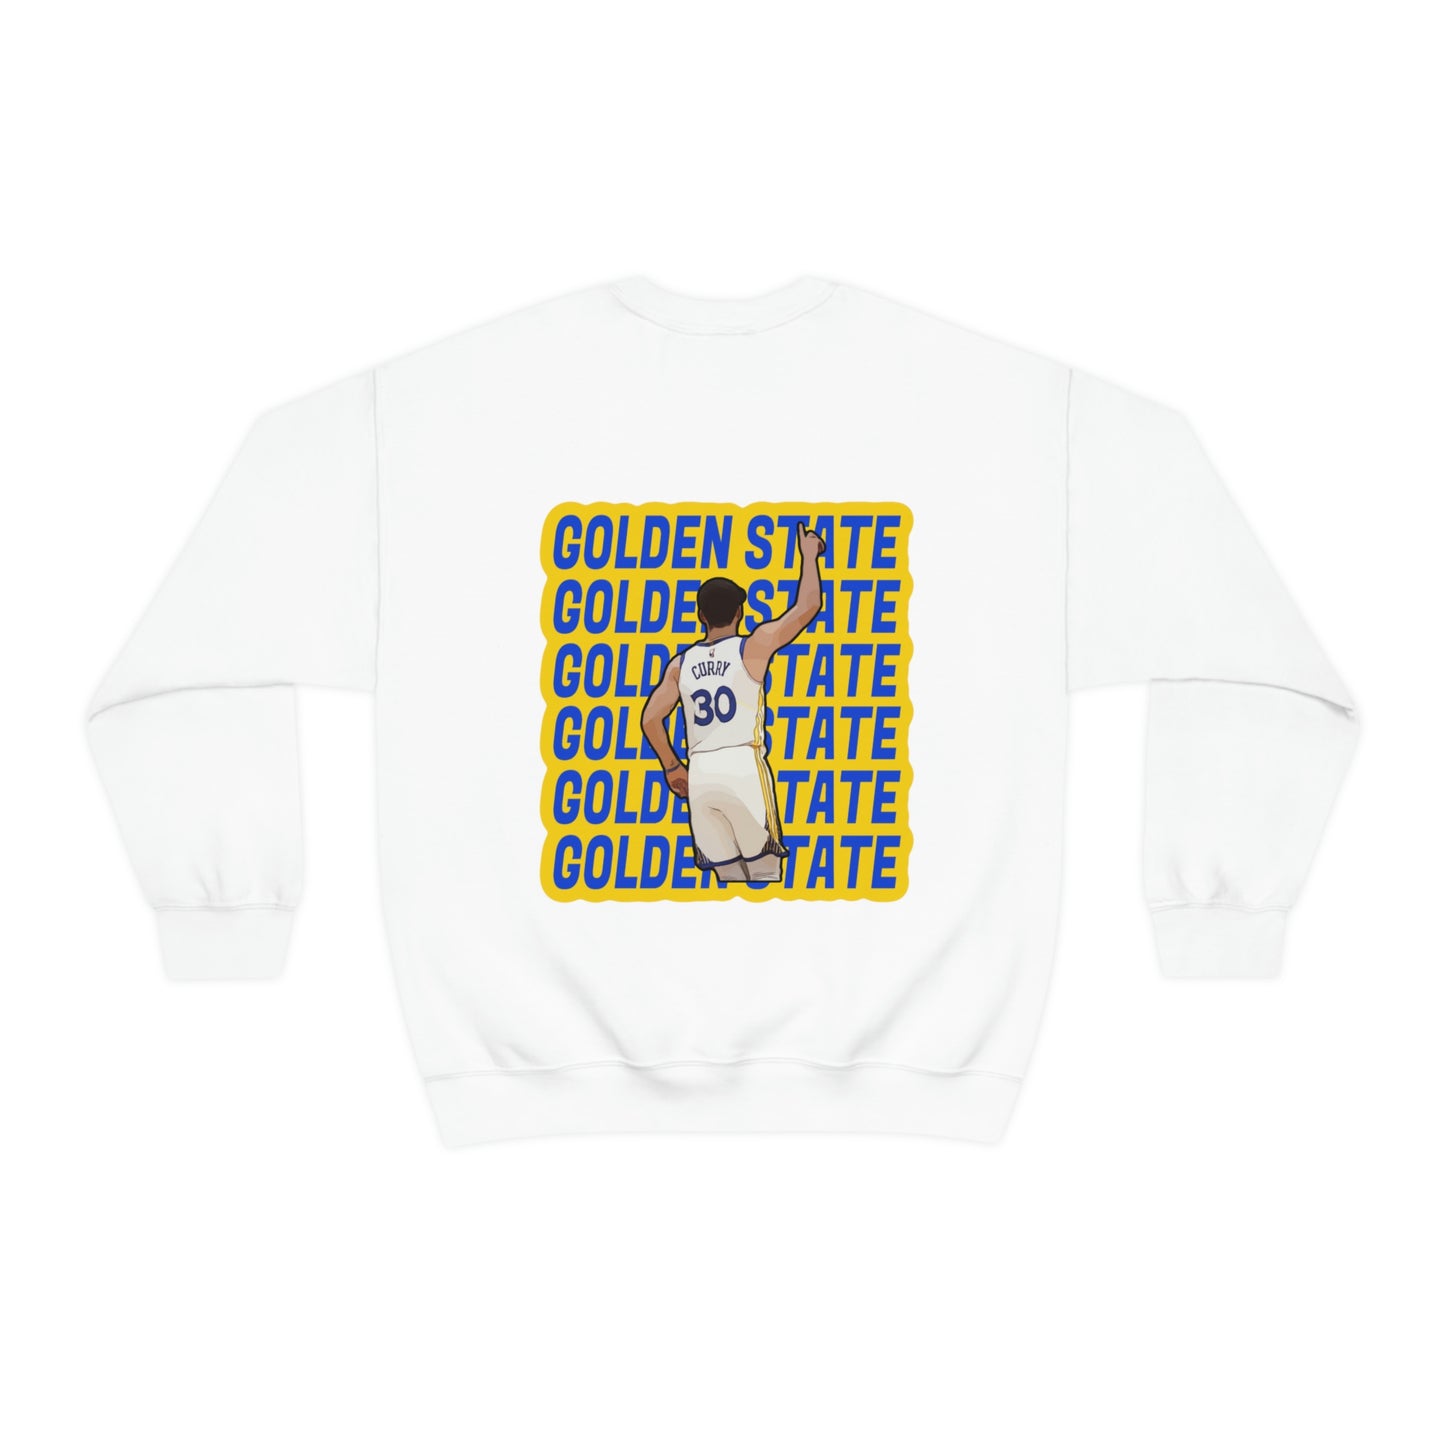 Golden State Steph Curry Sweatshirt